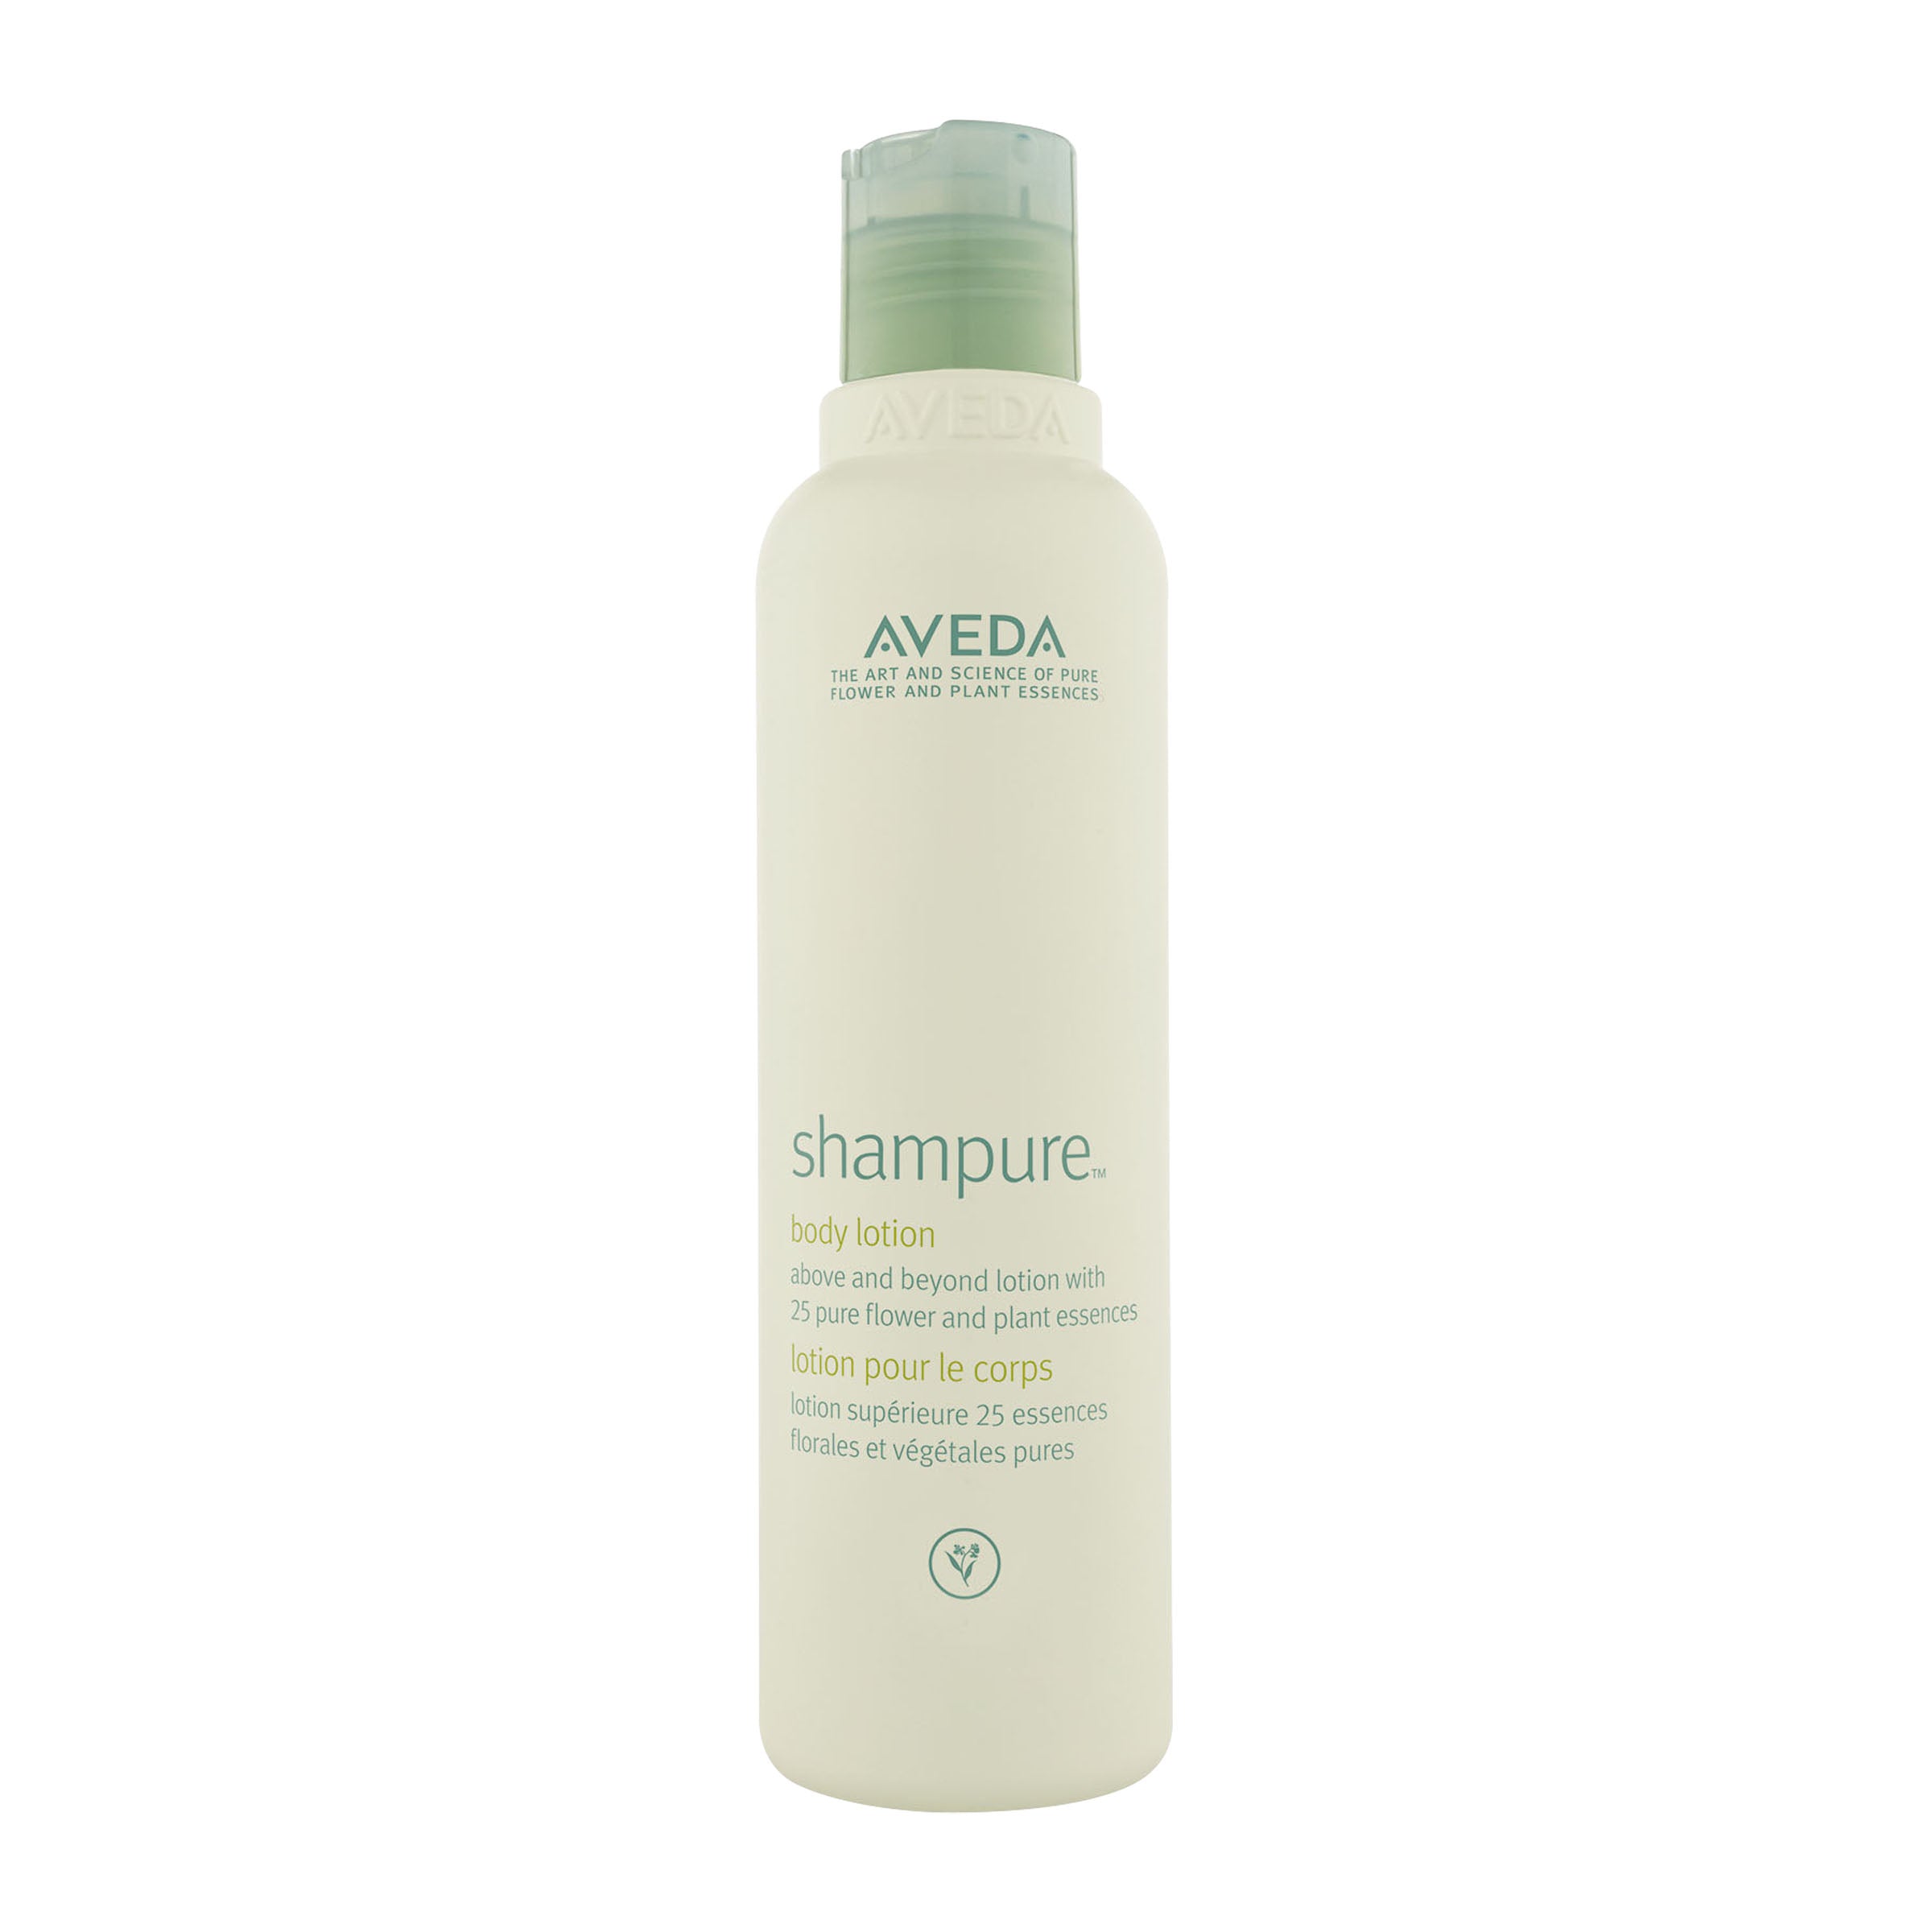 Aveda shampure™ body lotion